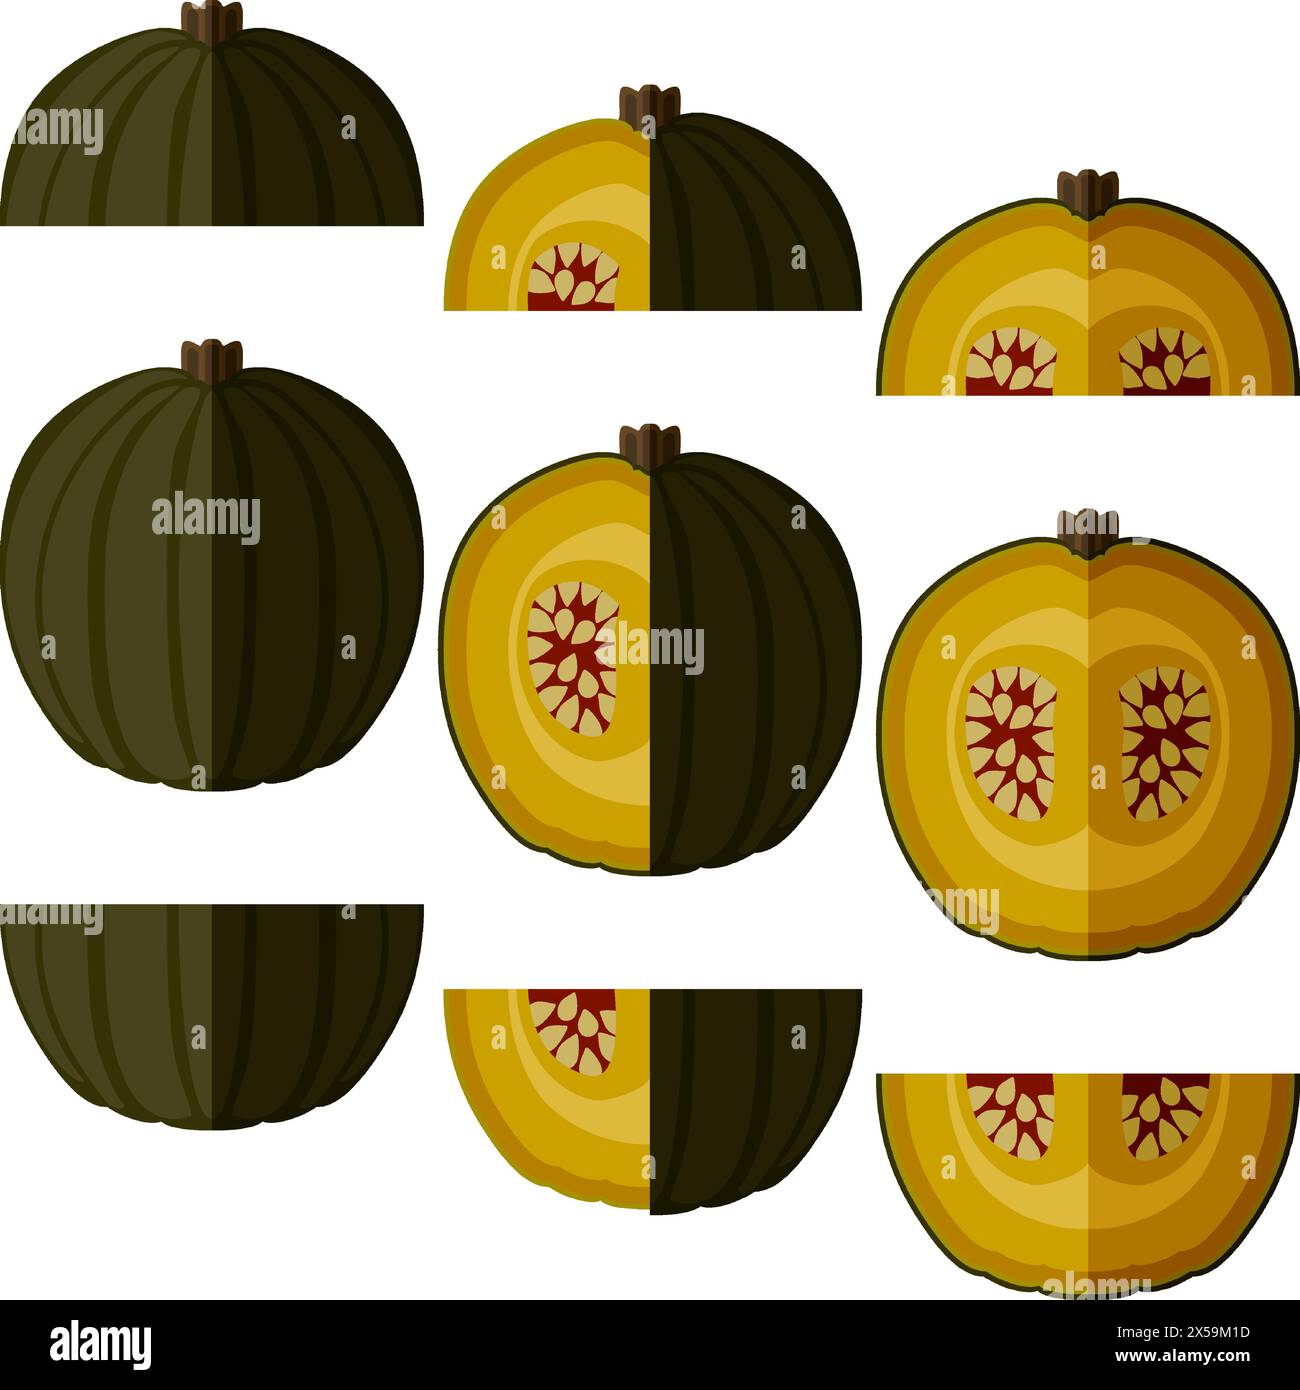 Set of Zapallo Macre Squash. Winter squash. Cucurbita maxima. Fruits and vegetables. Flat style. Isolated vector illustration. Stock Vector